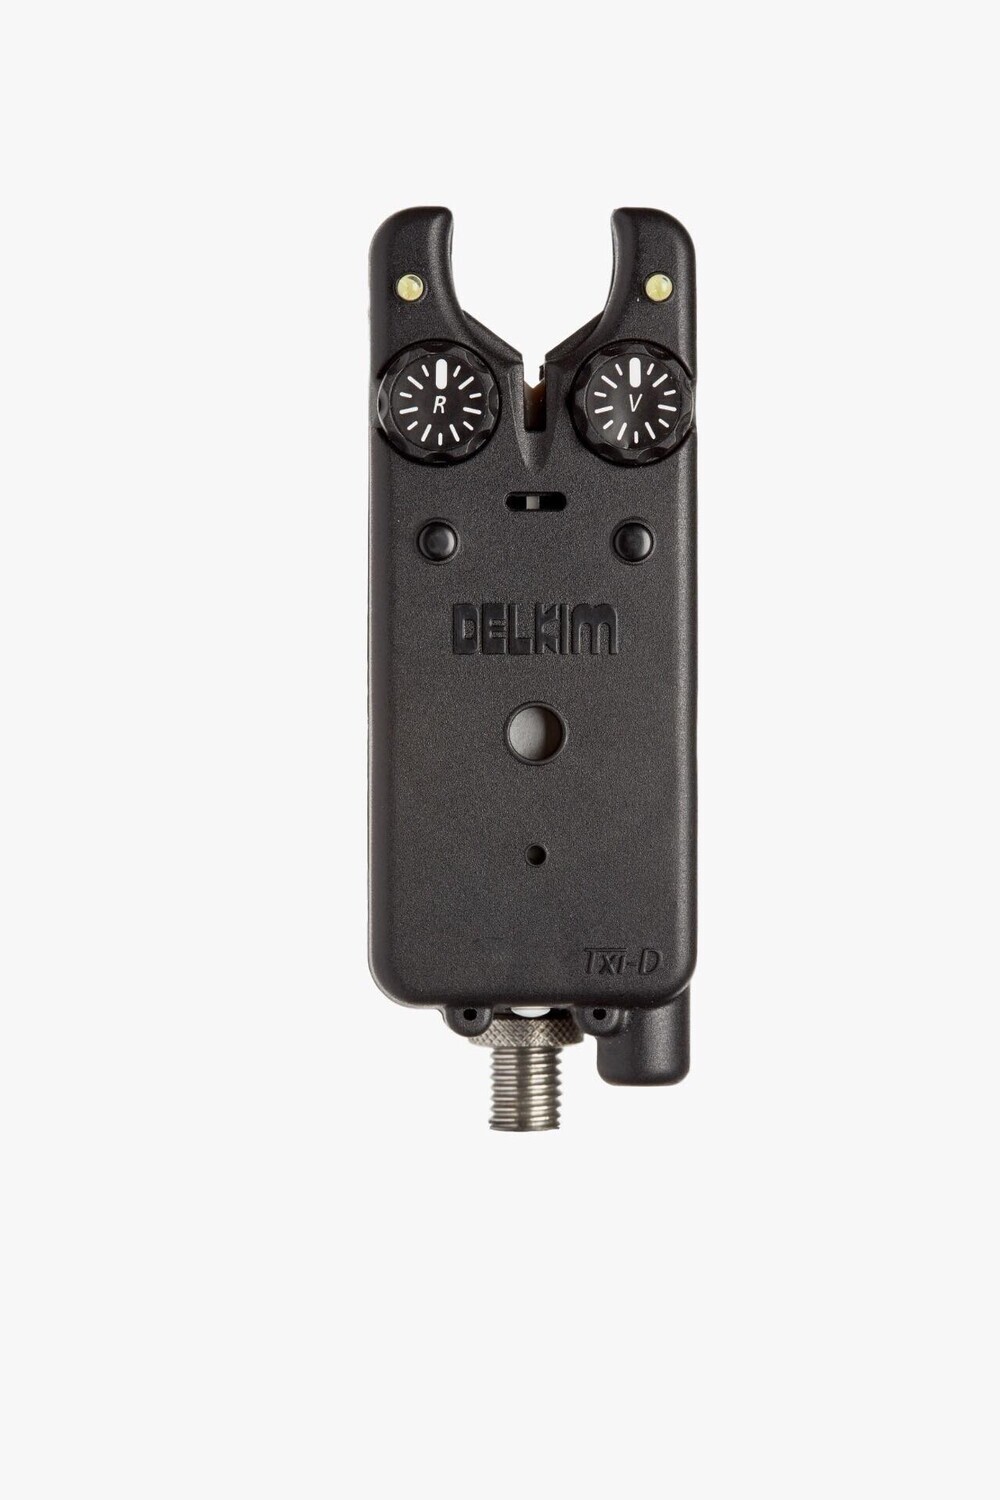 Delkim Txi-D - Digital Bite Alarm (White LEDs)